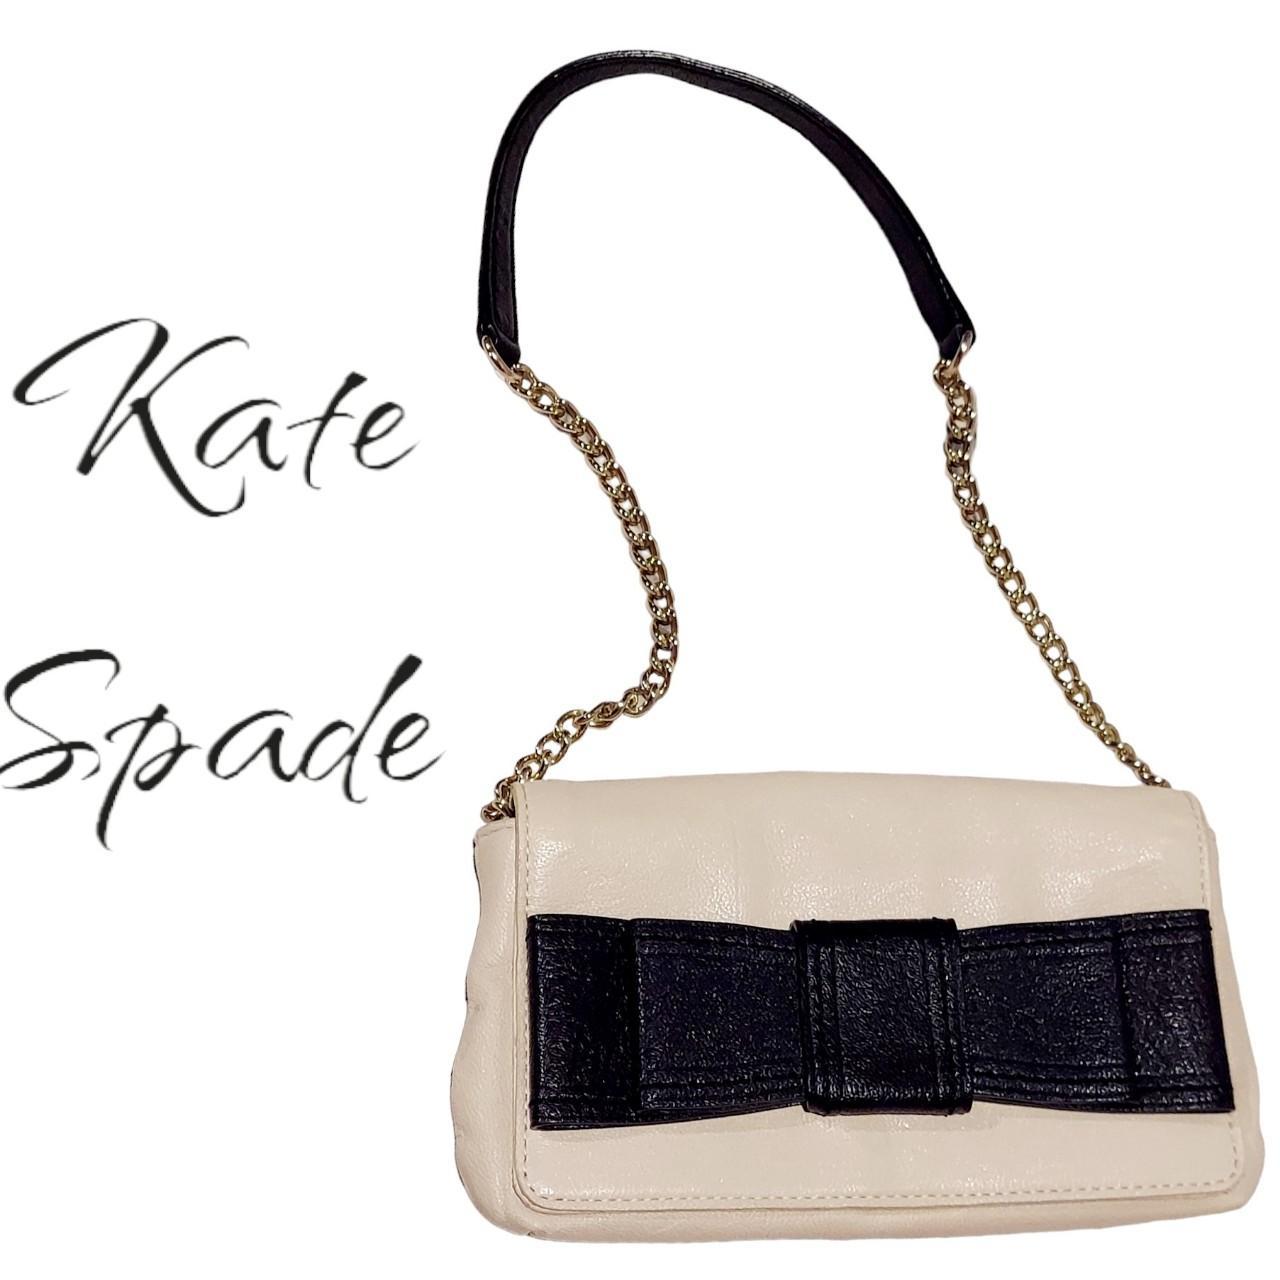 Kate Spade New York Black White Bow Peplum - Depop